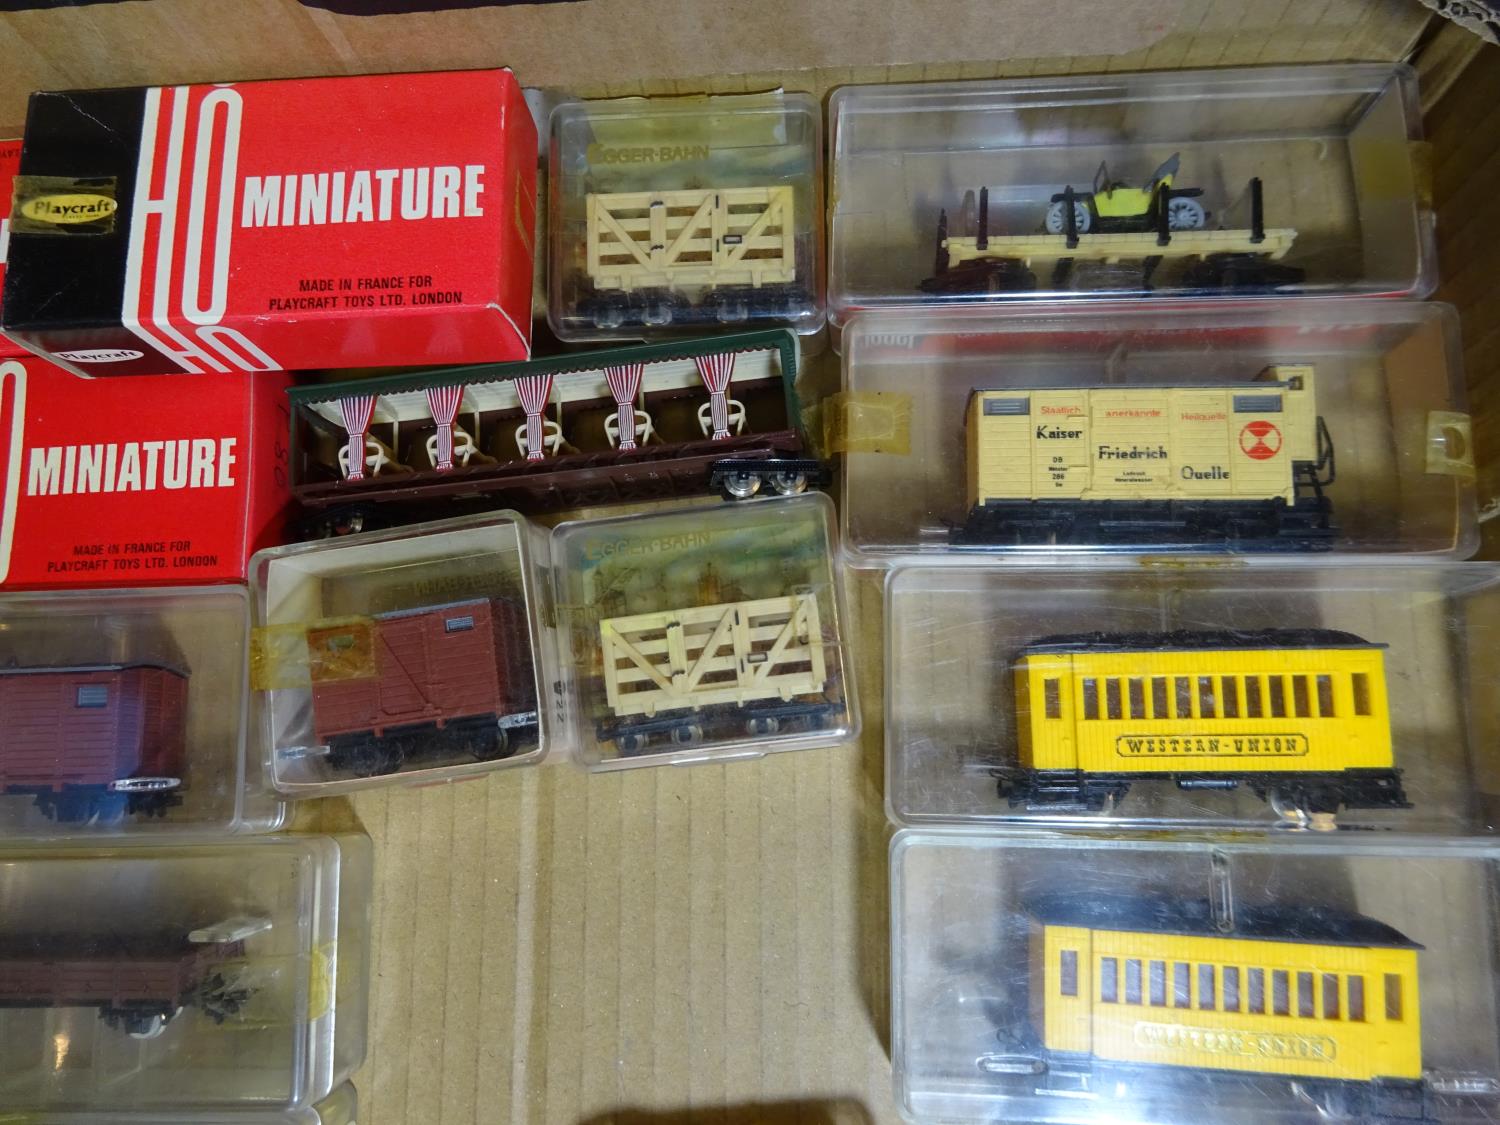 A quantity of HO/HOe Miniature gauge (N gauge) and HO gauge model railway by Egger-Bahn, Playcraft, - Image 5 of 9